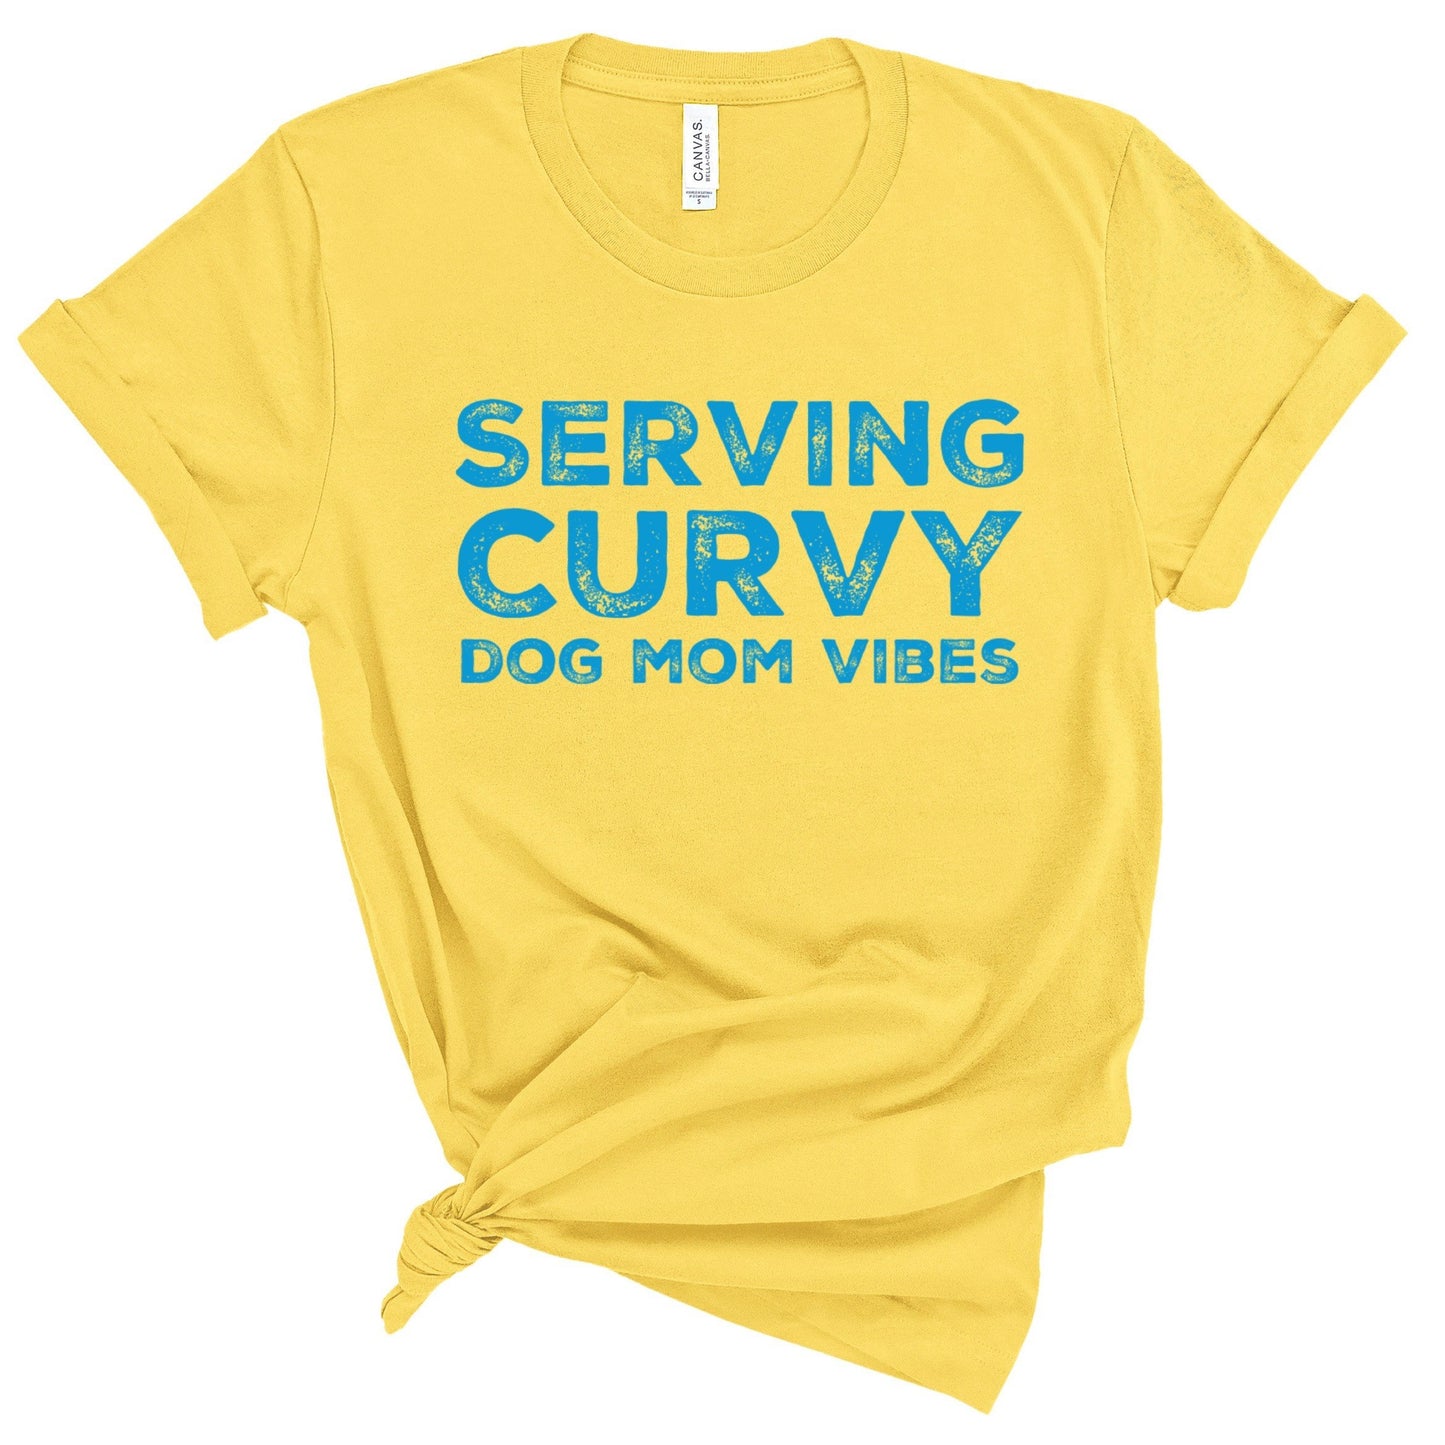 Serving Curvy Dog Mom Vibes